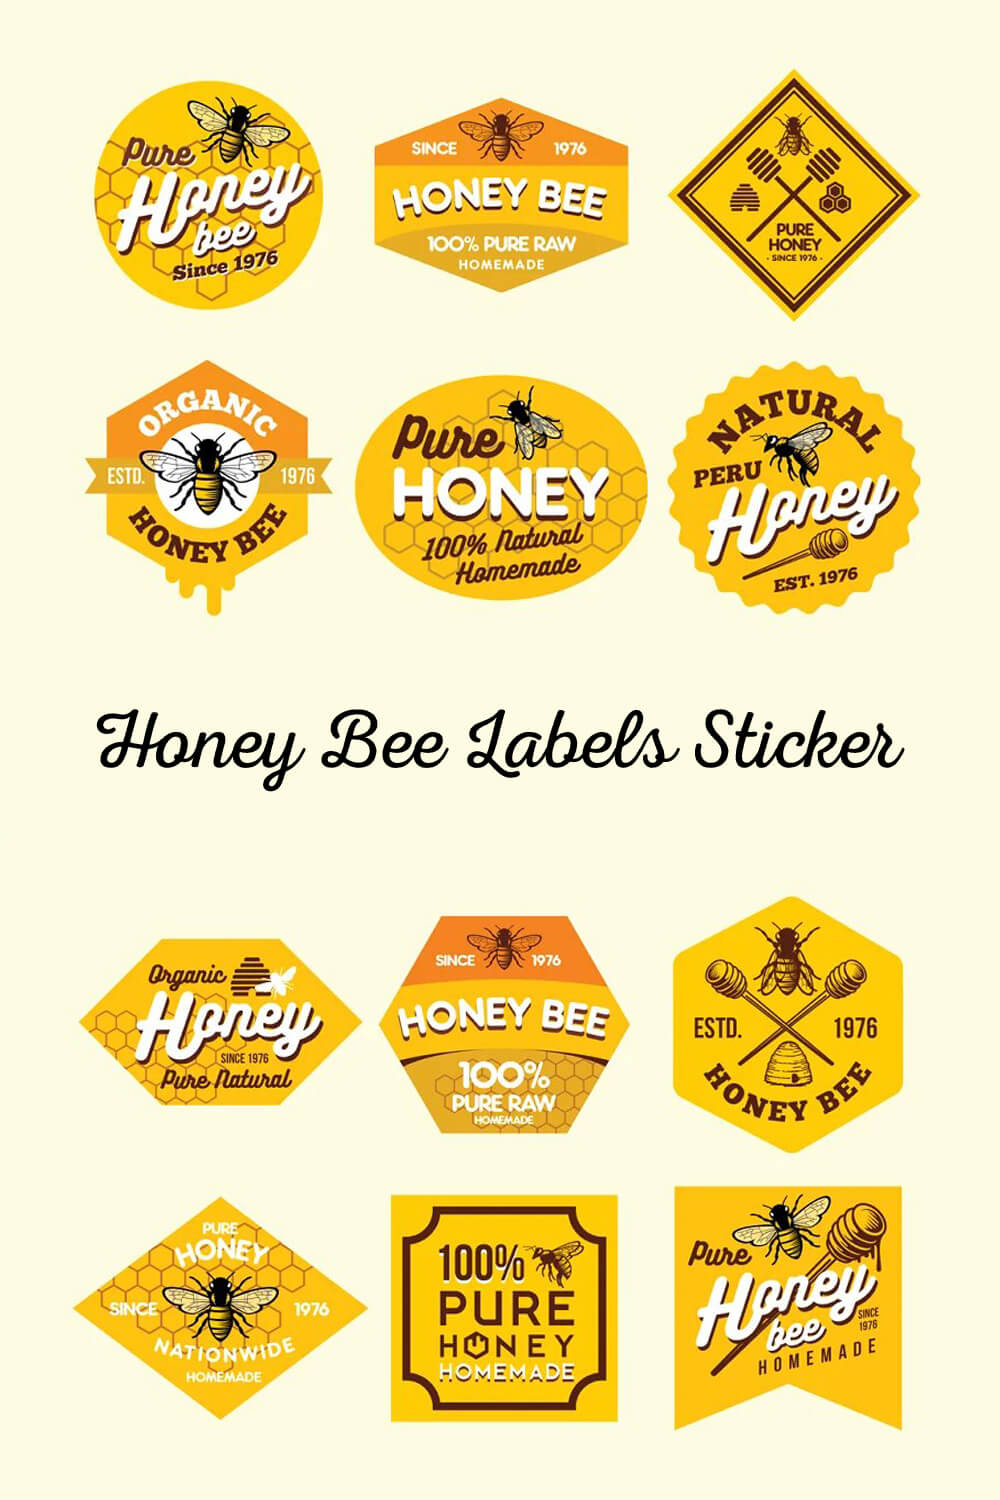 Honey bee labels sticker.